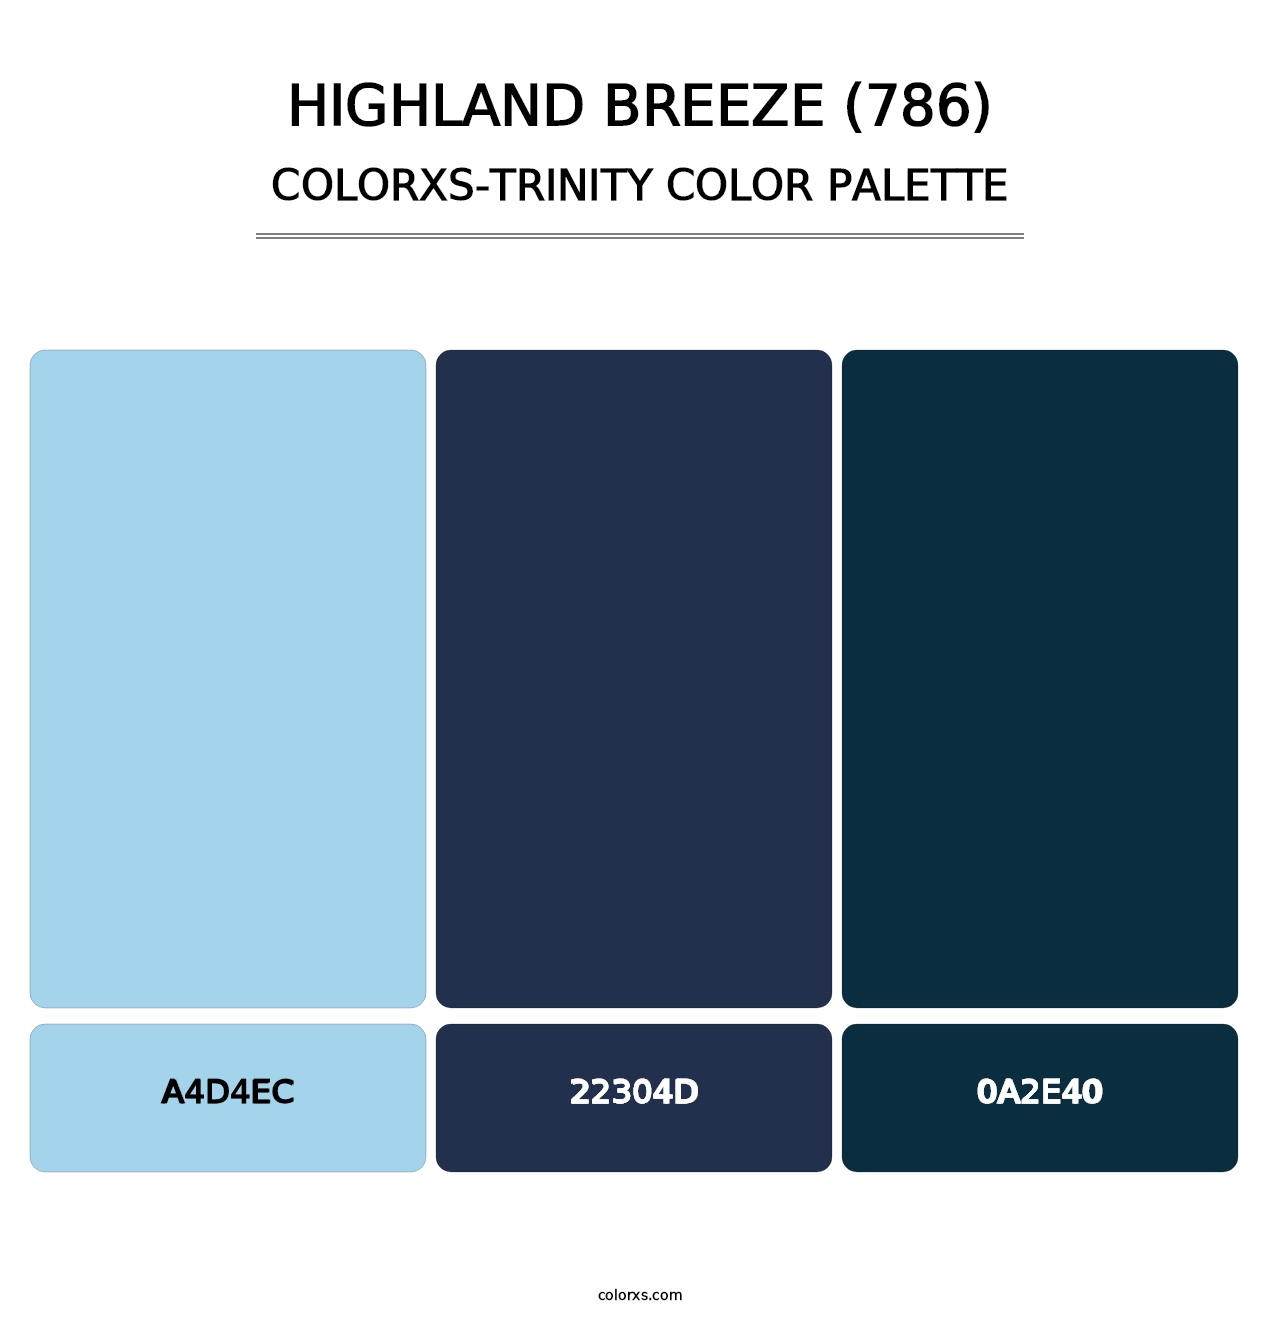 Highland Breeze (786) - Colorxs Trinity Palette